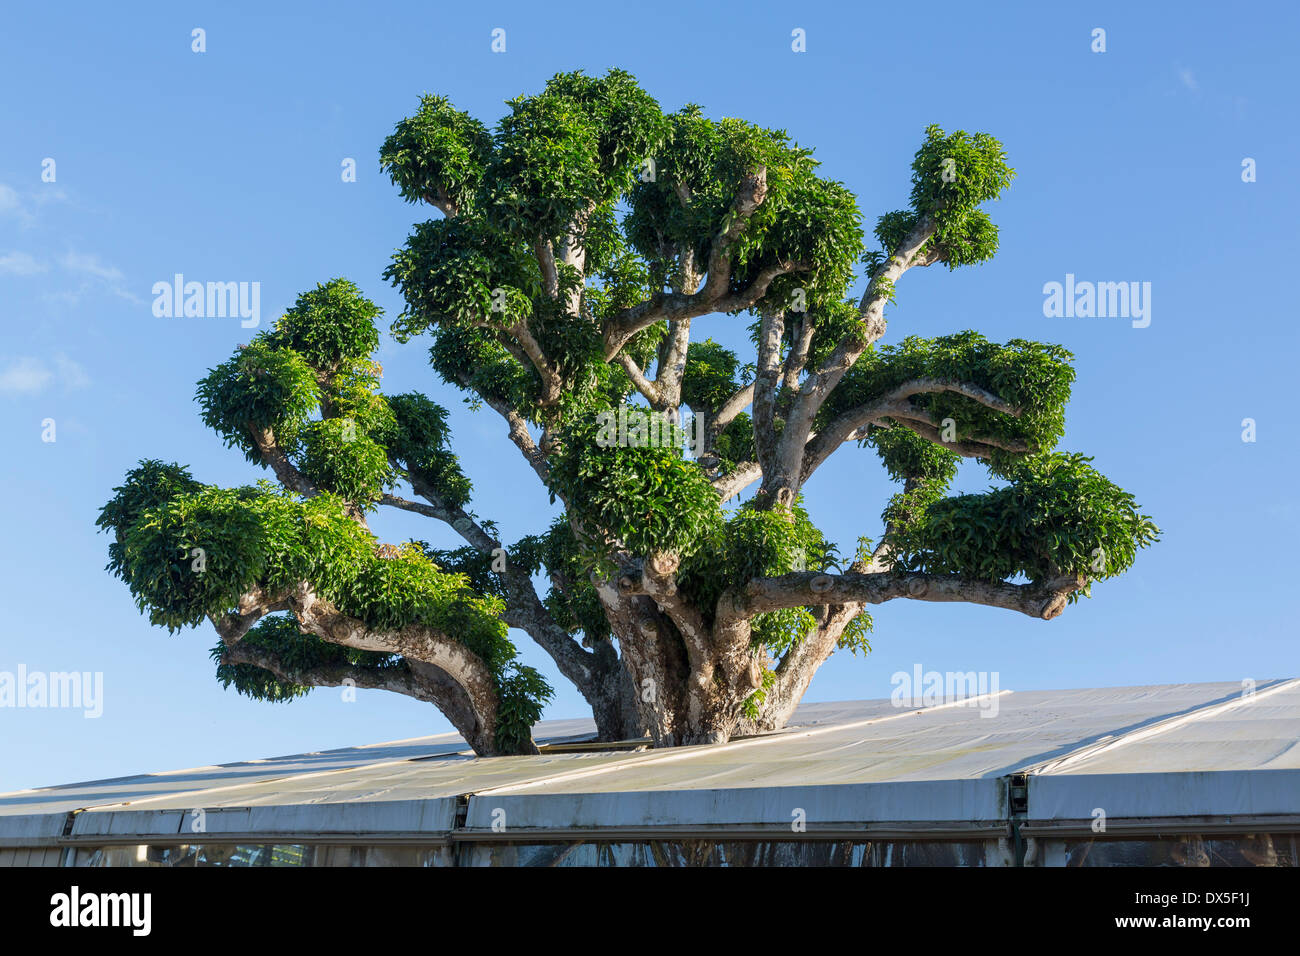 Large acacia or koa tree growing inside a large tent building, Hawaii, USA Stock Photo